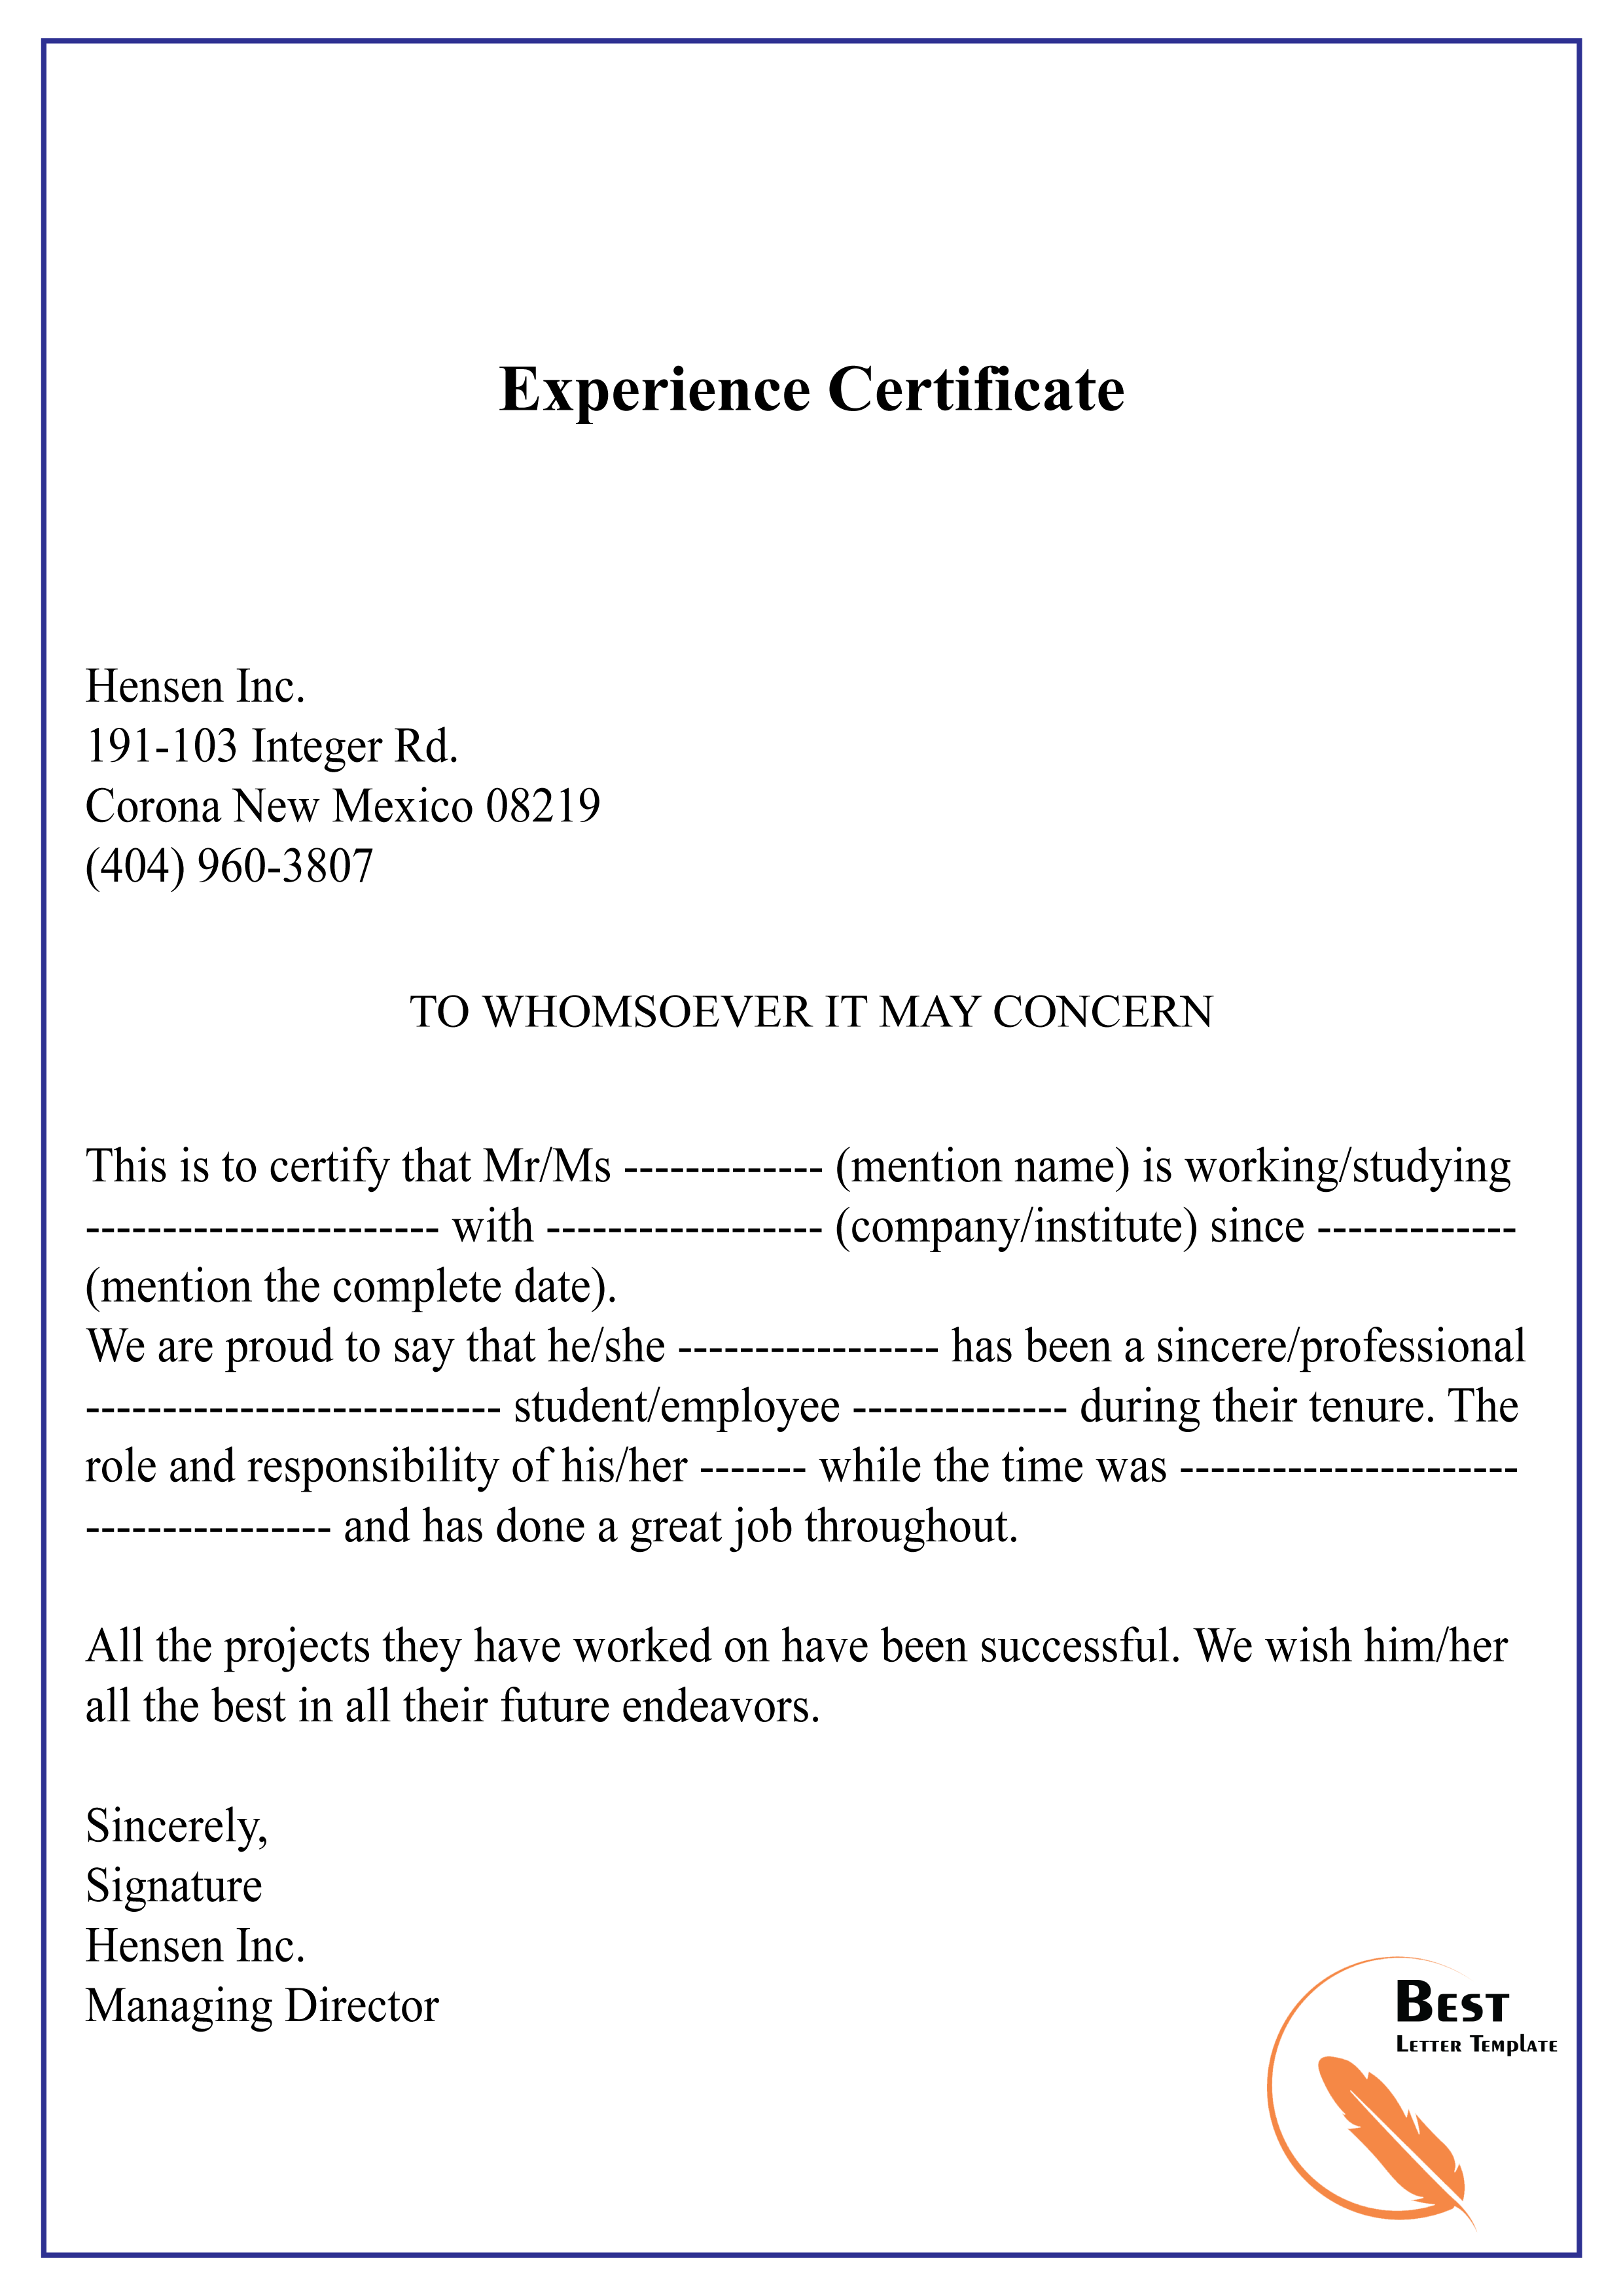 Experience Certificate 01 